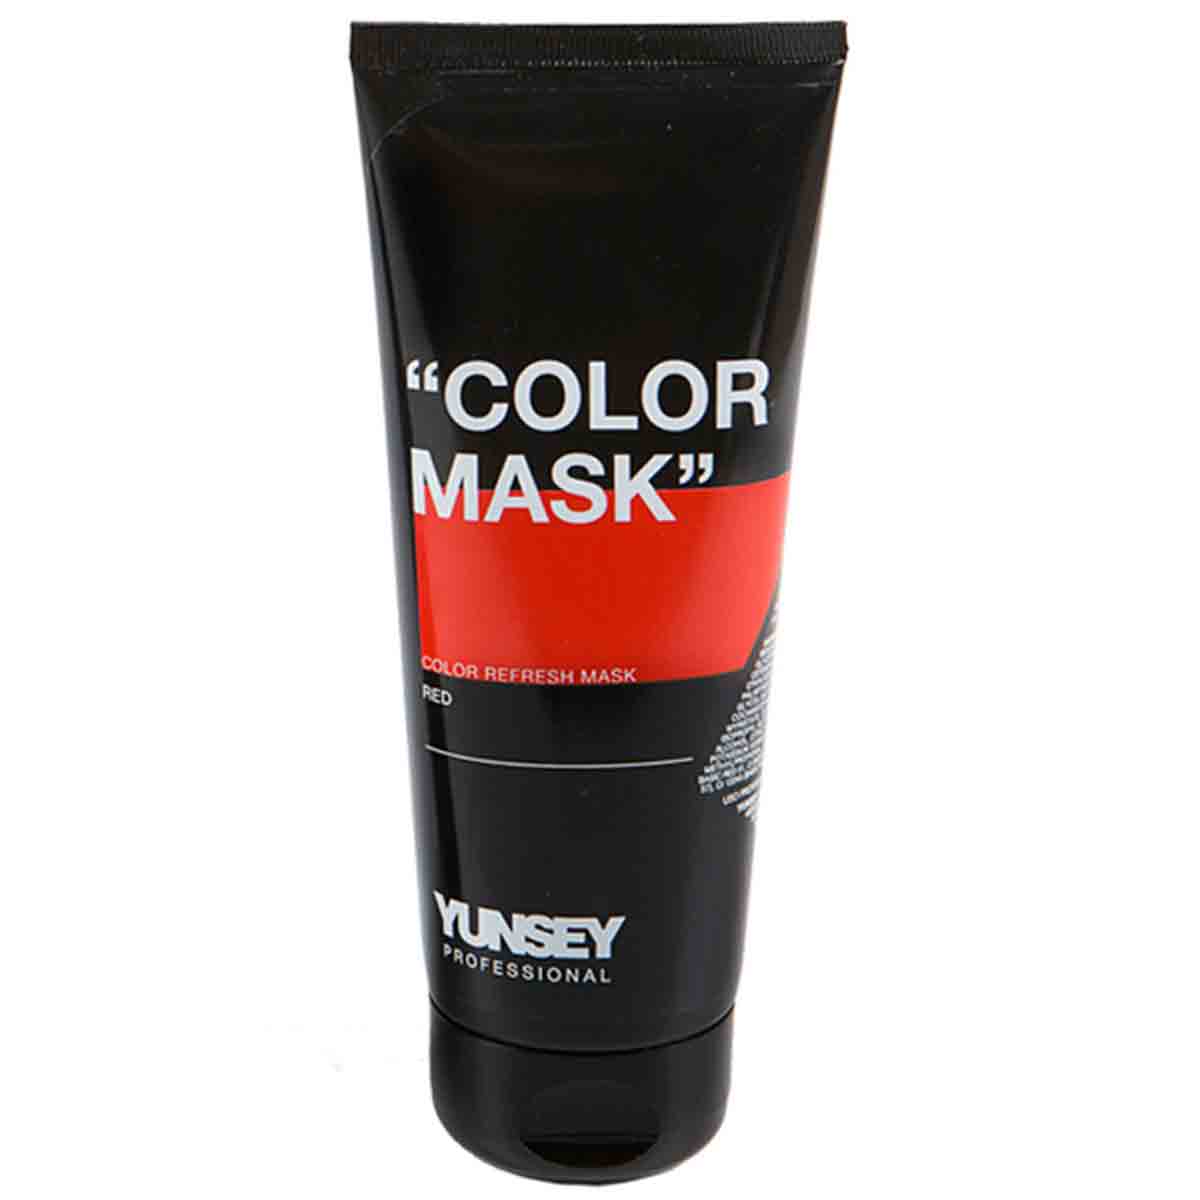 ماسک مو رنگساژ یانسی Yunsey رنگ قرمز حجم 200 میلی لیتر